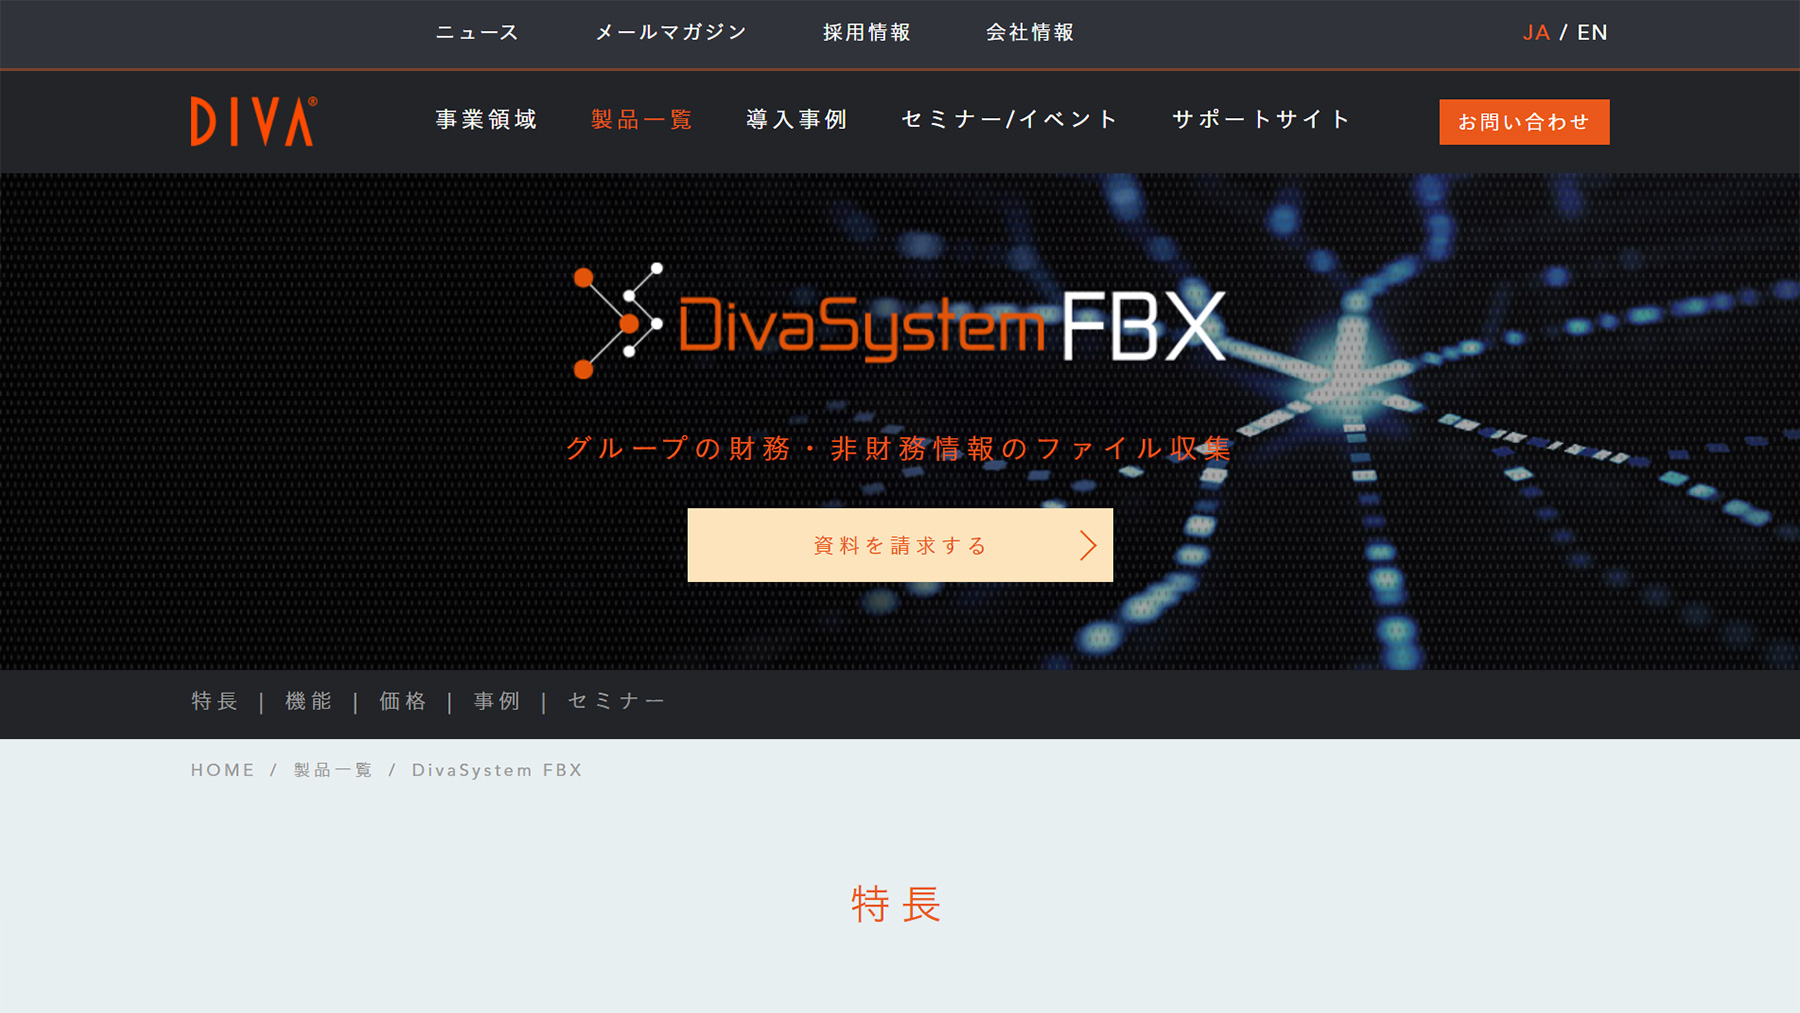 Diva System FBX